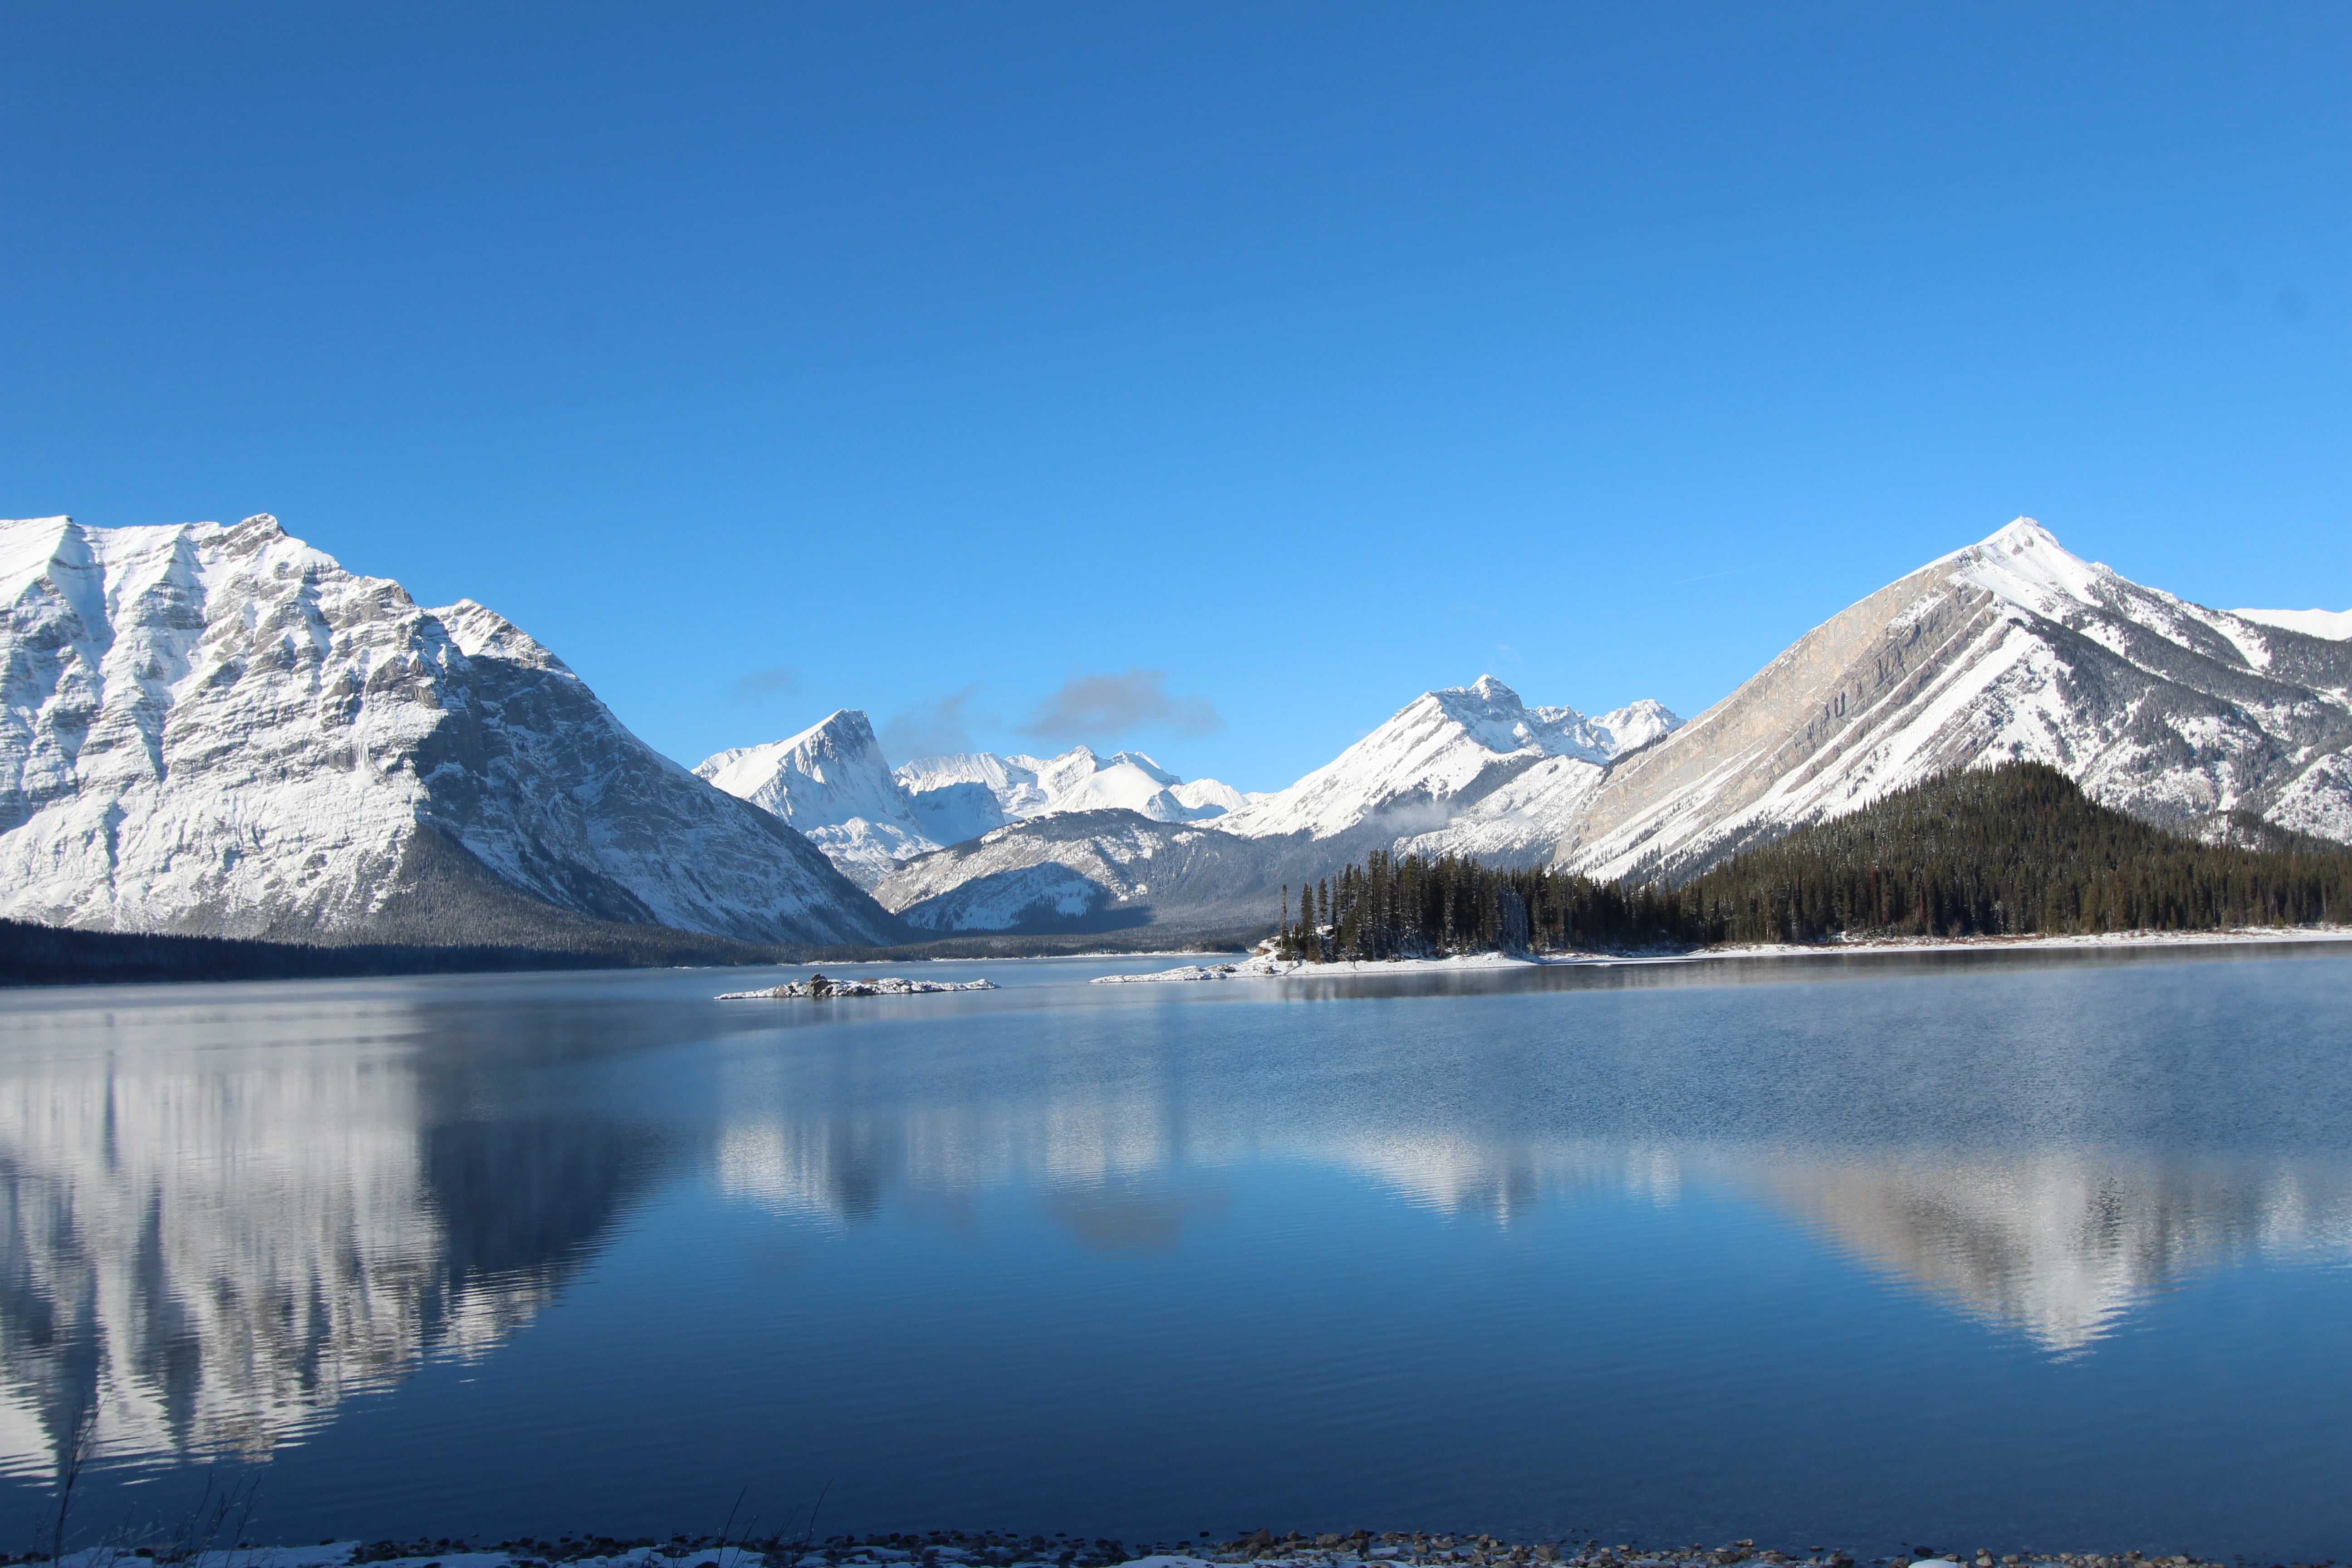 snow covered mountains near body of water during daytime, upper kananaskis lake, canada, upper kananaskis lake, canada